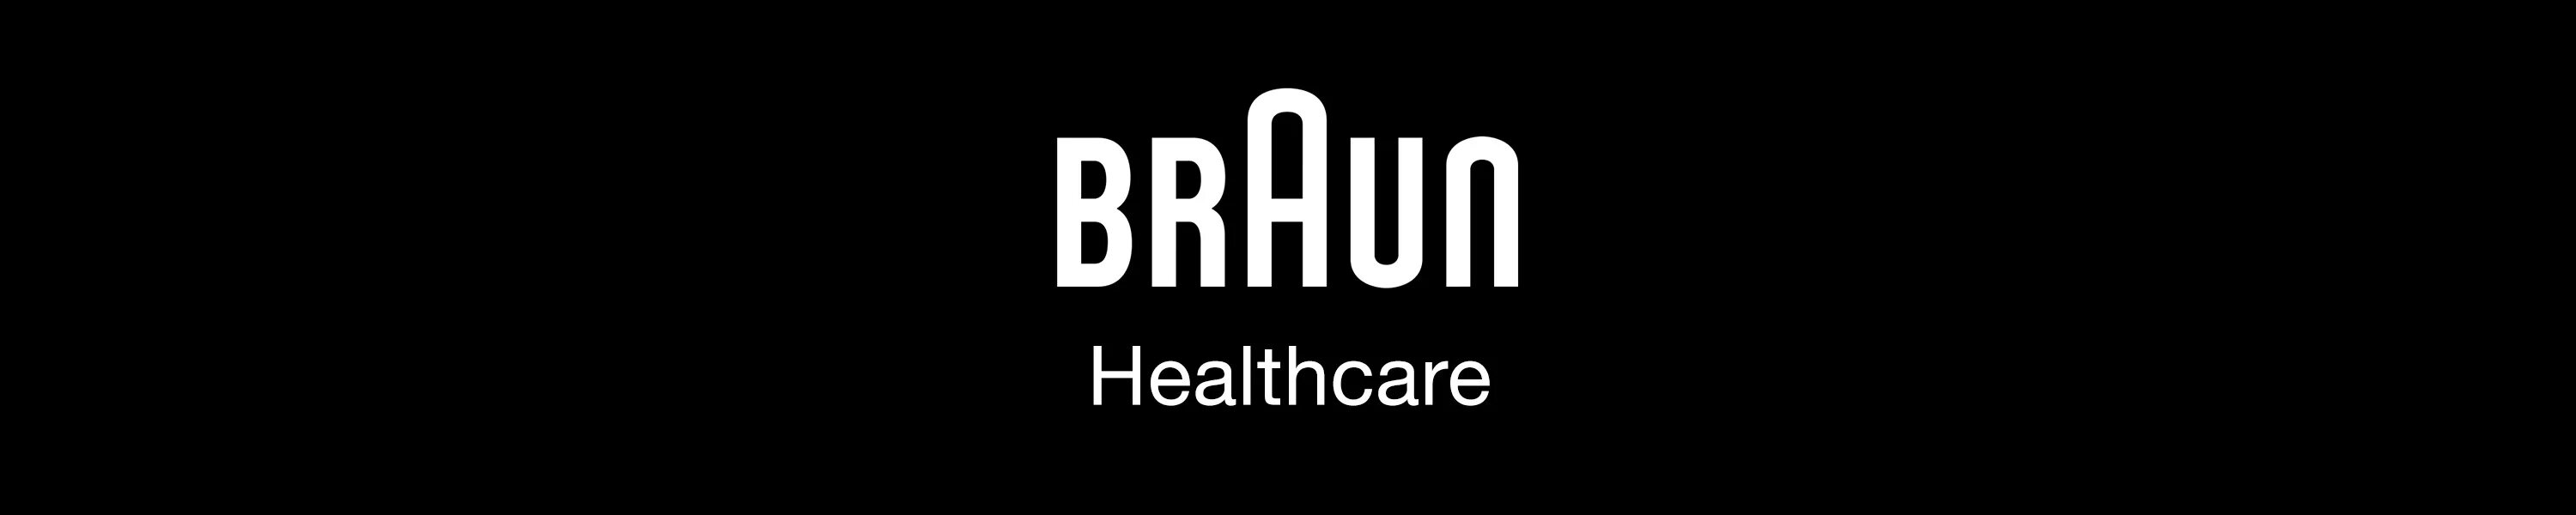 Марка брауна. Braun компания. Браун лого. Значок Braun. Логотип Braun бренд.